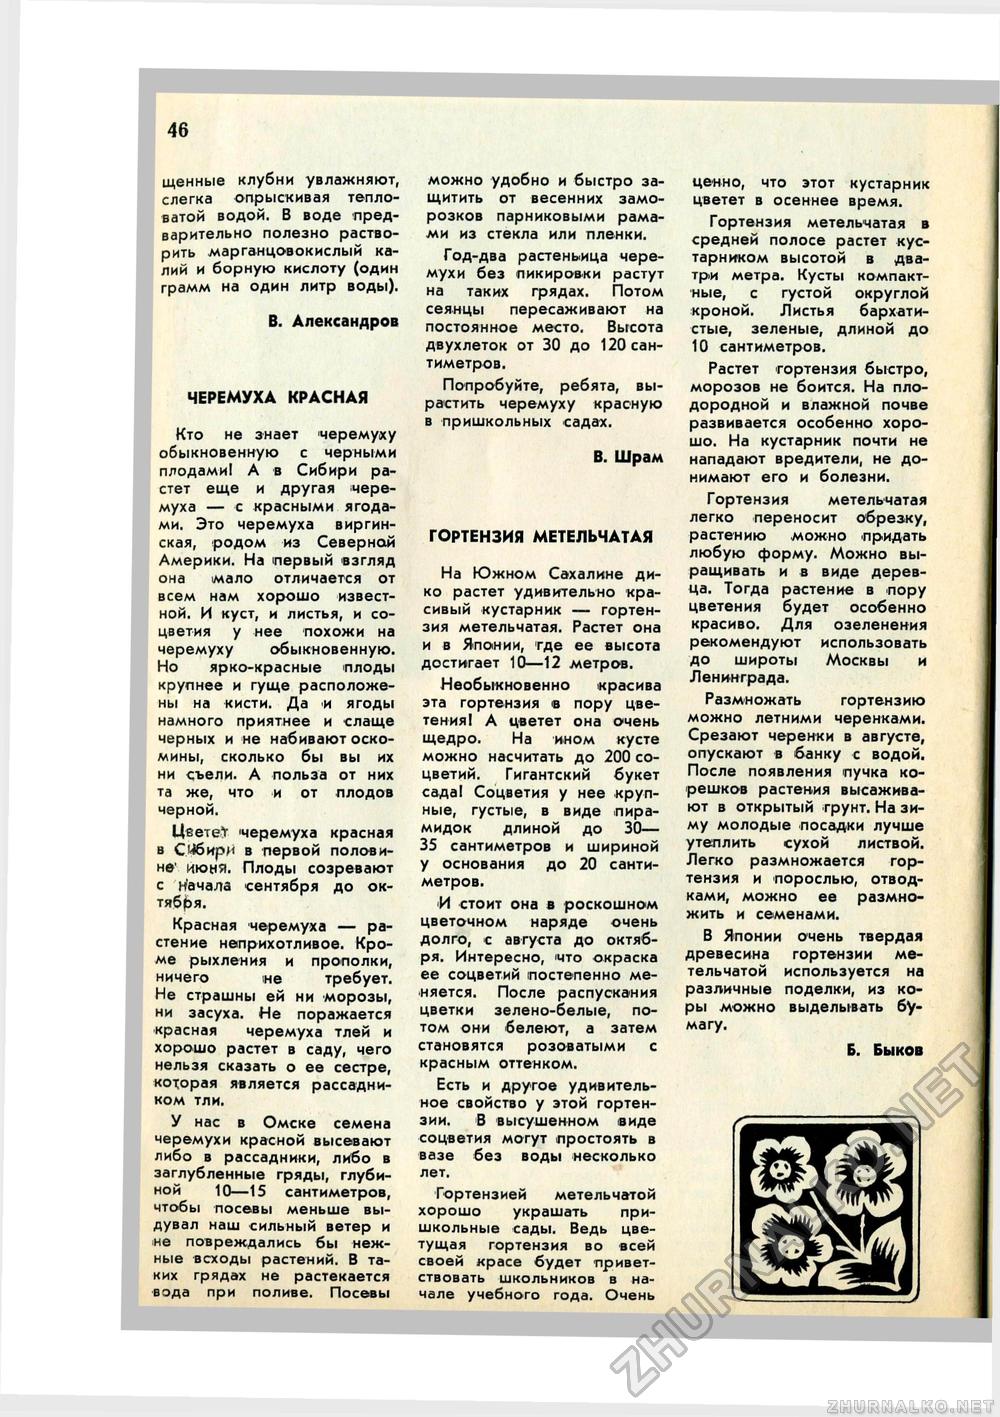 Юный Натуралист 1971-09, страница 46